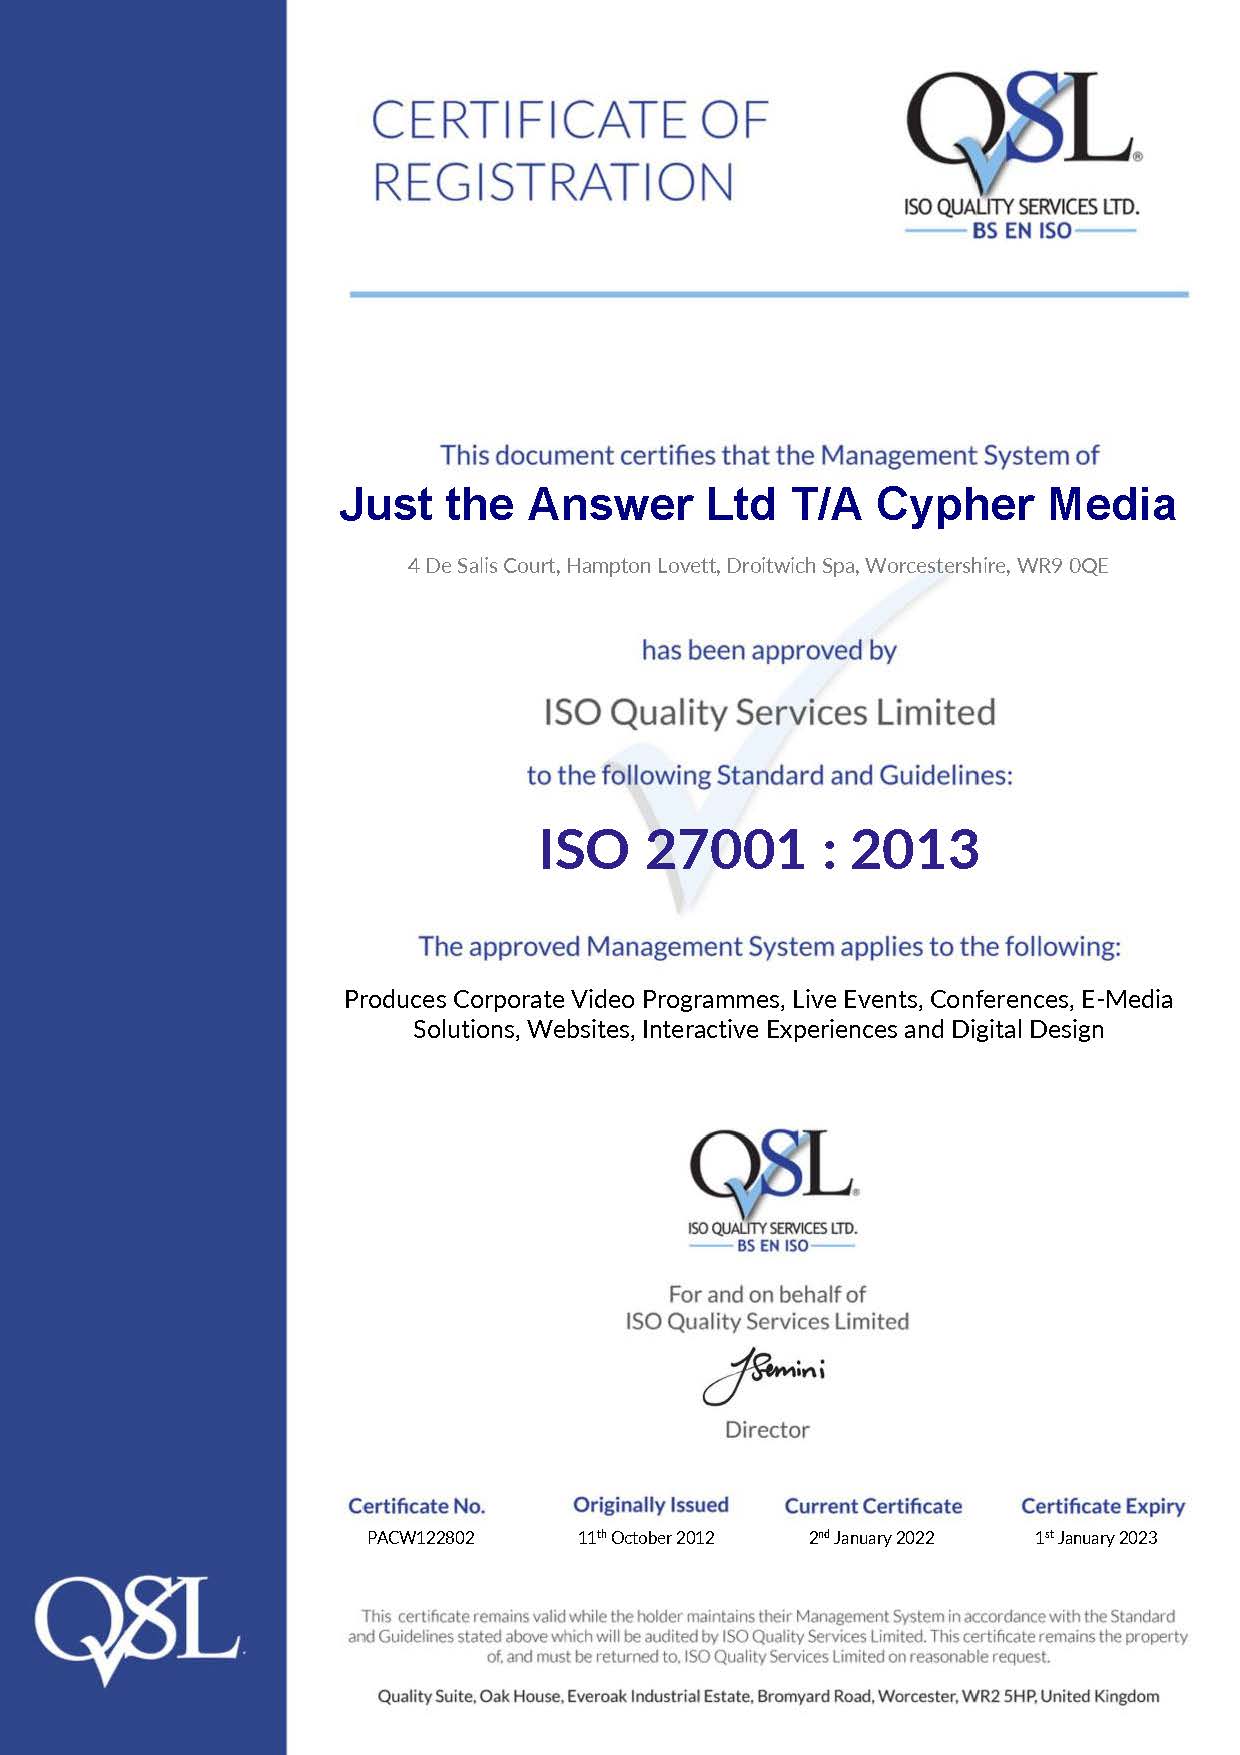 ISO 27001 recertification